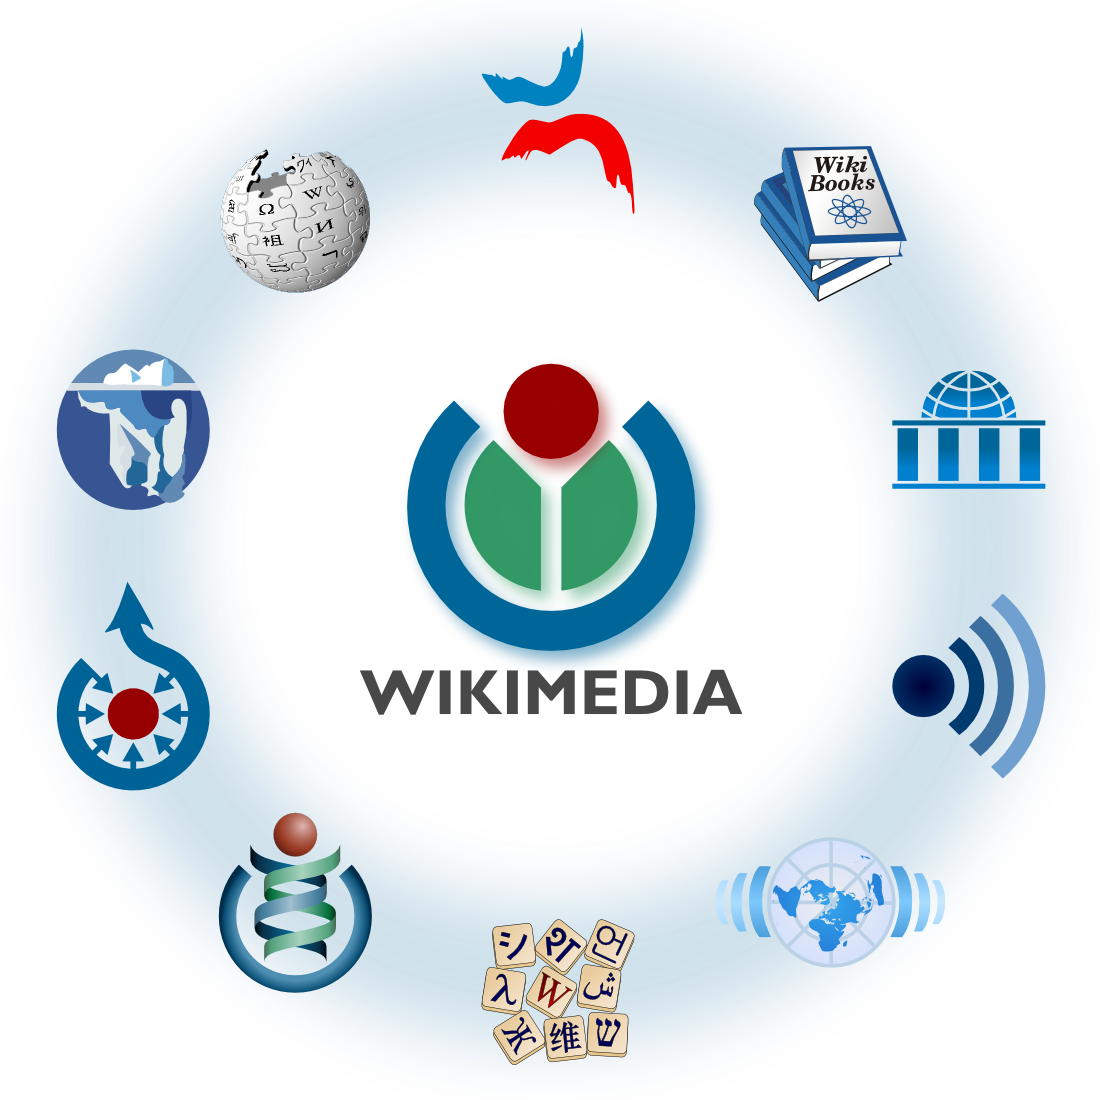 Wikimedia_logo_family